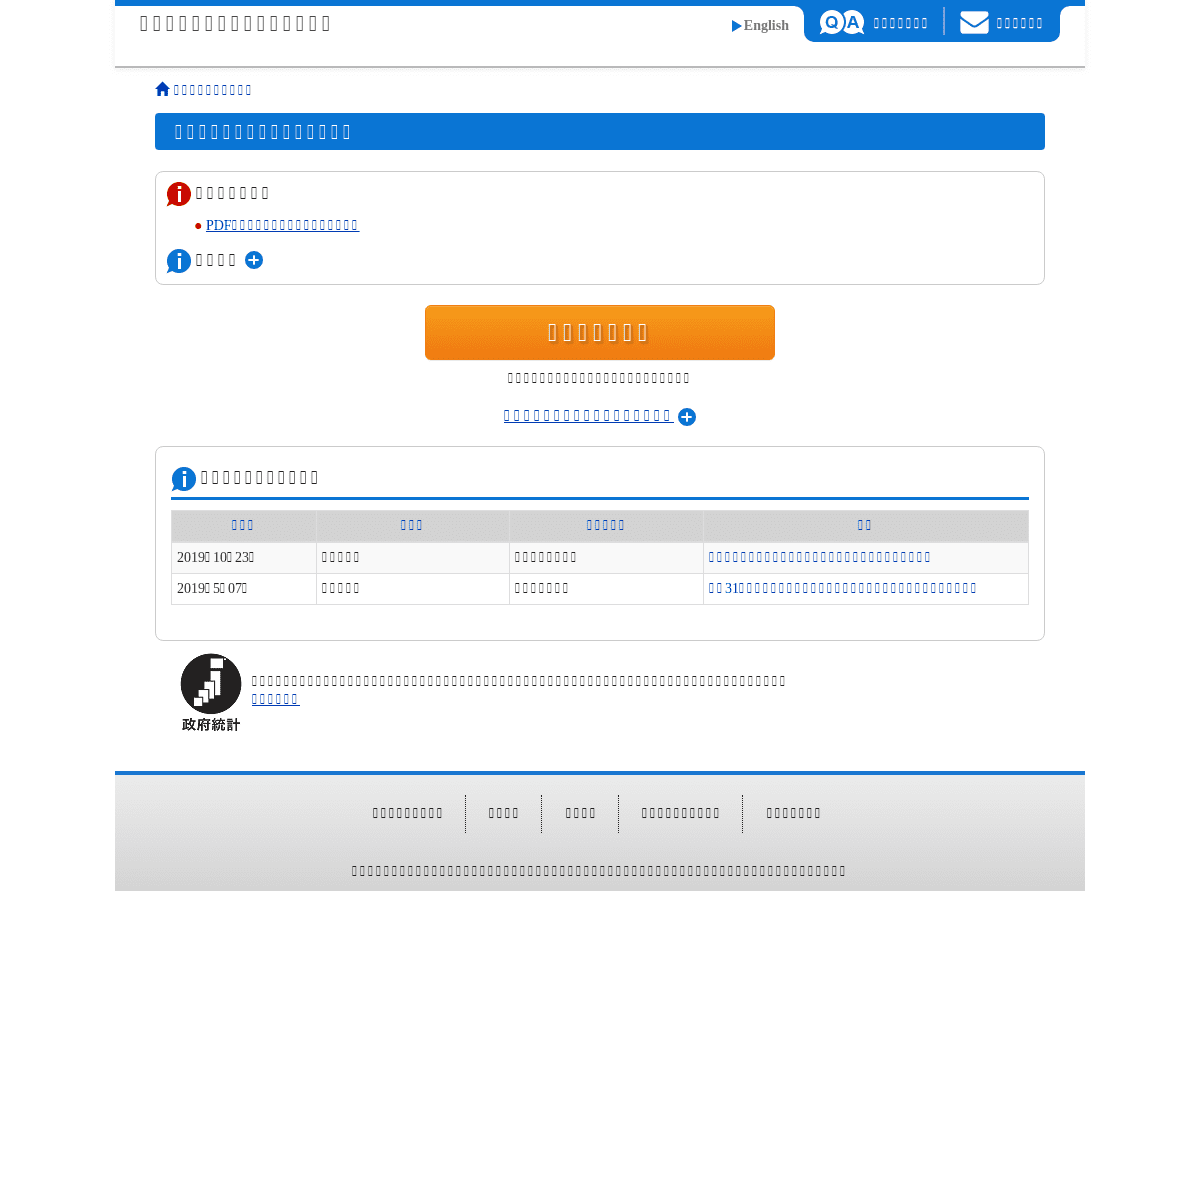 A complete backup of e-survey.go.jp